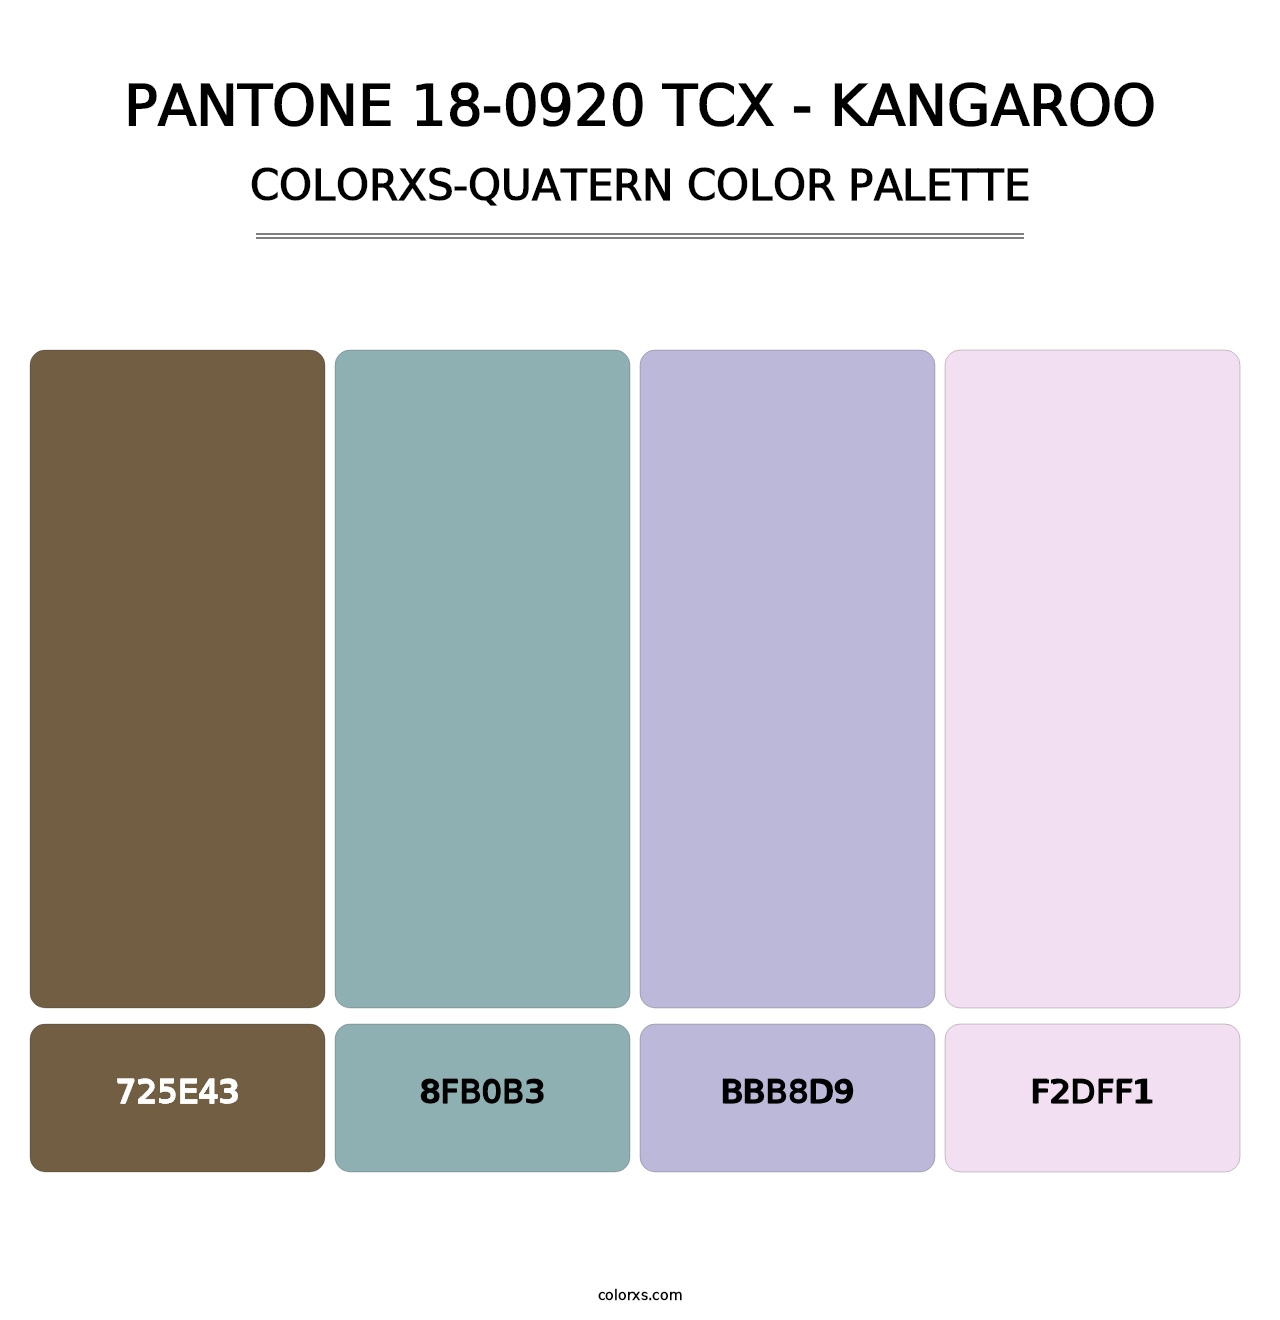 PANTONE 18-0920 TCX - Kangaroo - Colorxs Quatern Palette